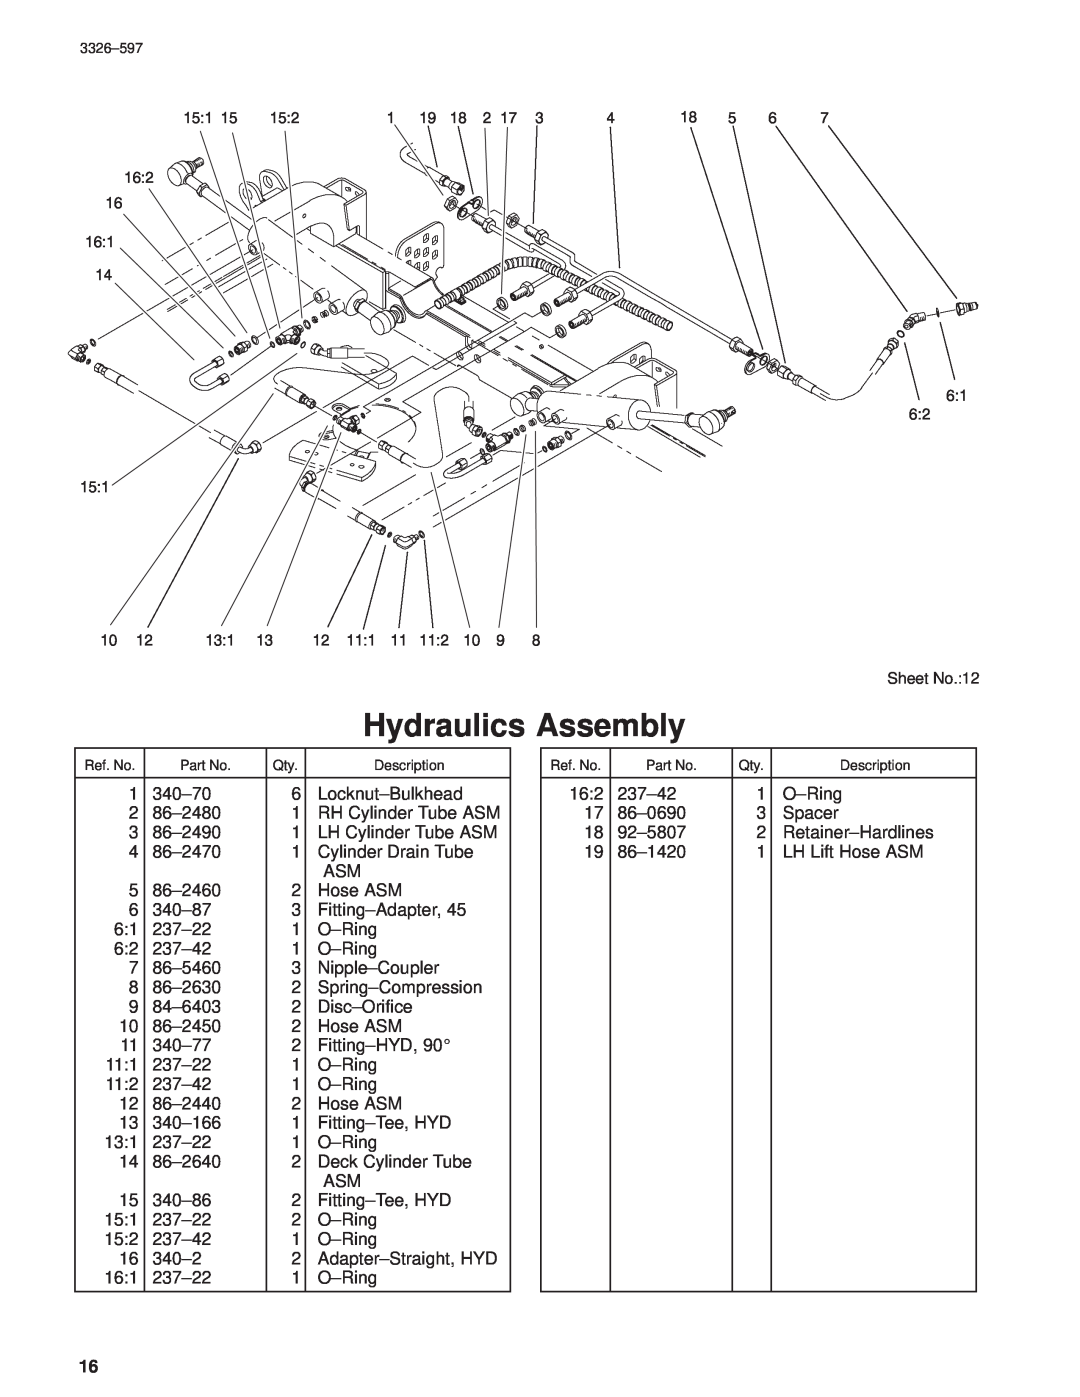 Toro 30402210000001 and Up manual Hydraulics Assembly, Sheet No.12 